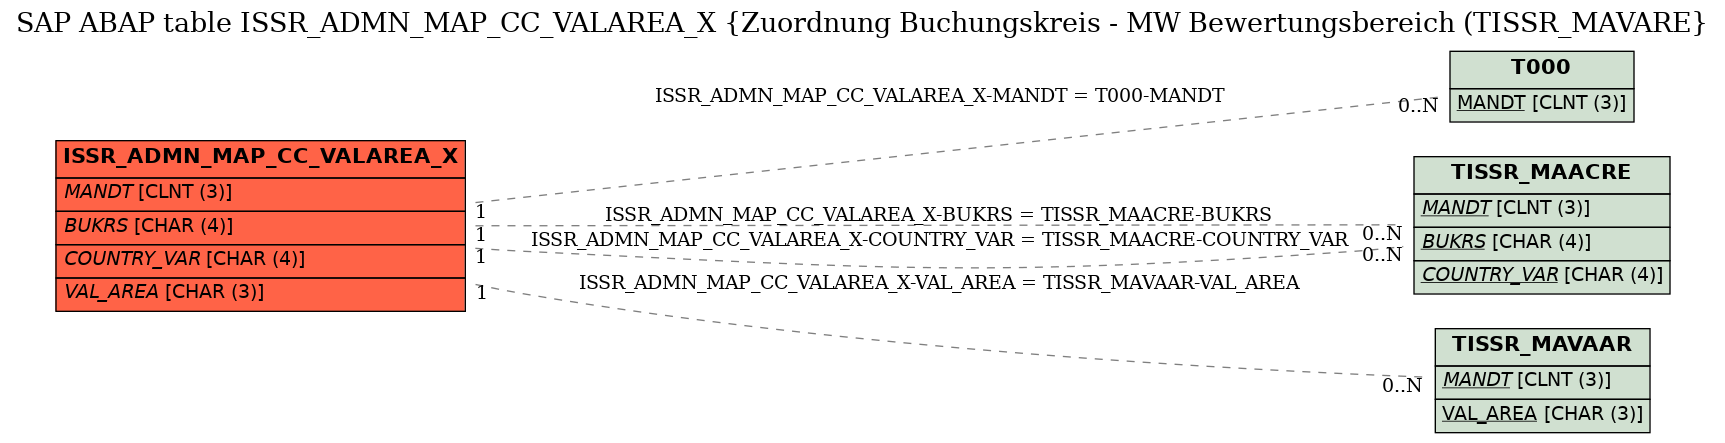 E-R Diagram for table ISSR_ADMN_MAP_CC_VALAREA_X (Zuordnung Buchungskreis - MW Bewertungsbereich (TISSR_MAVARE)